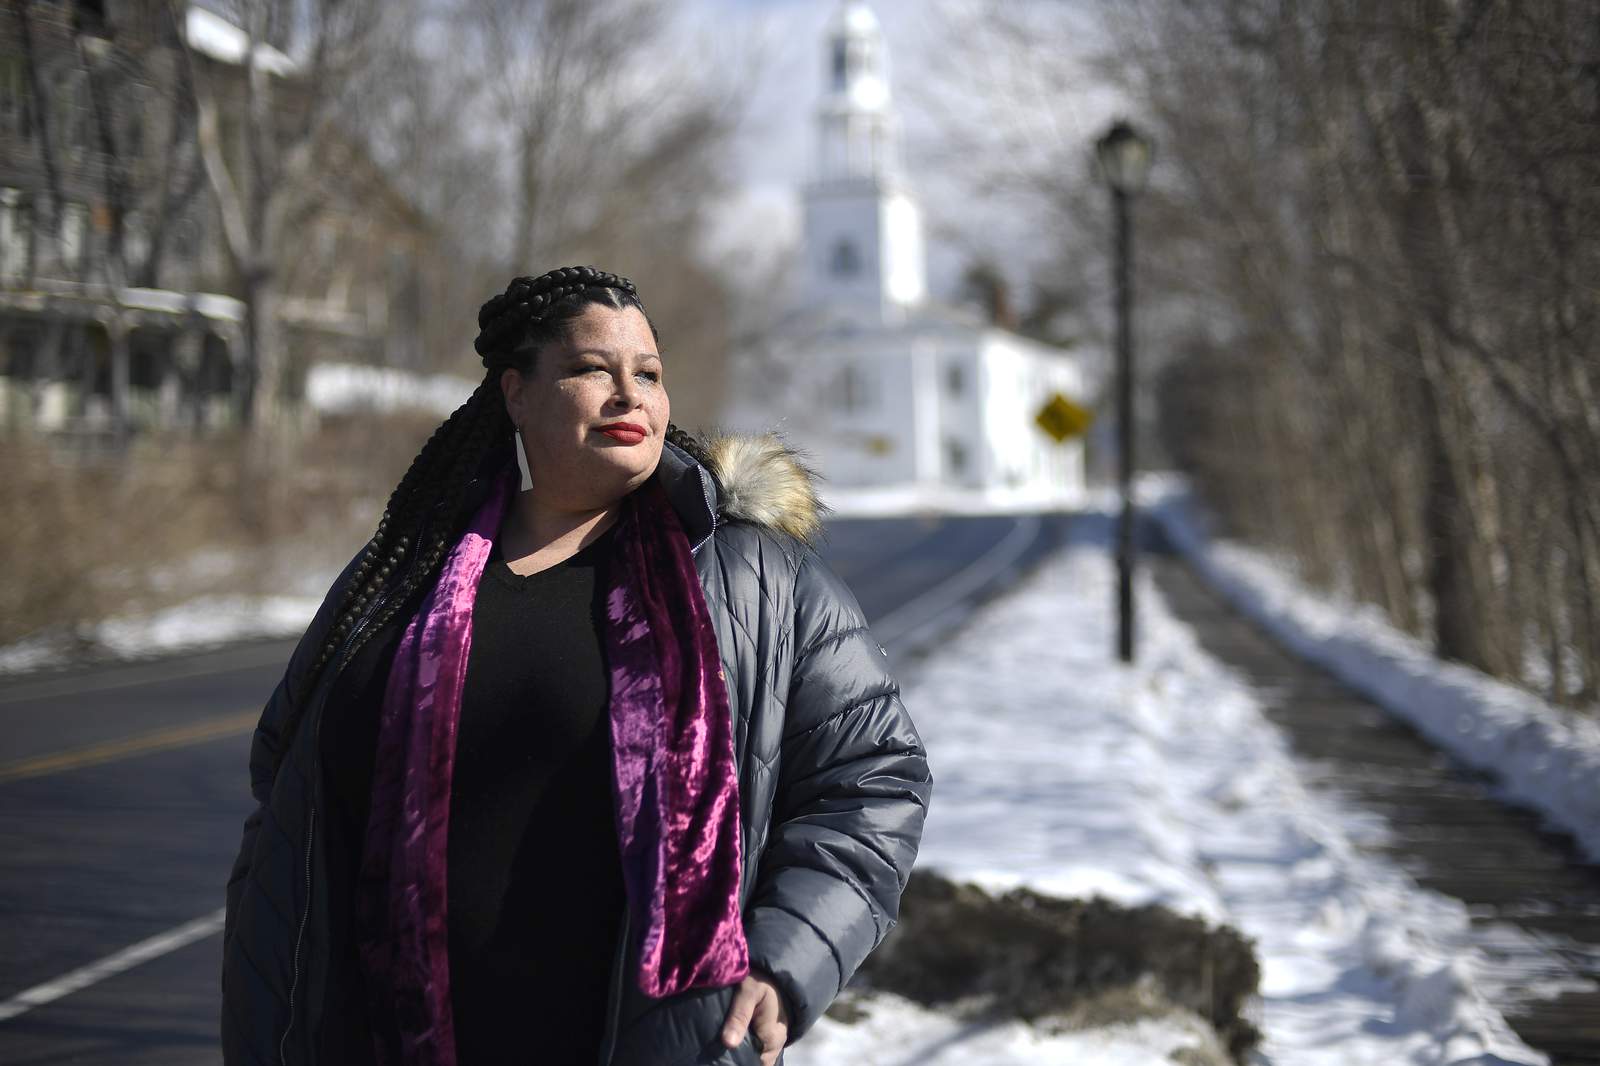 Black women persevere to lead in Vermont despite harassment